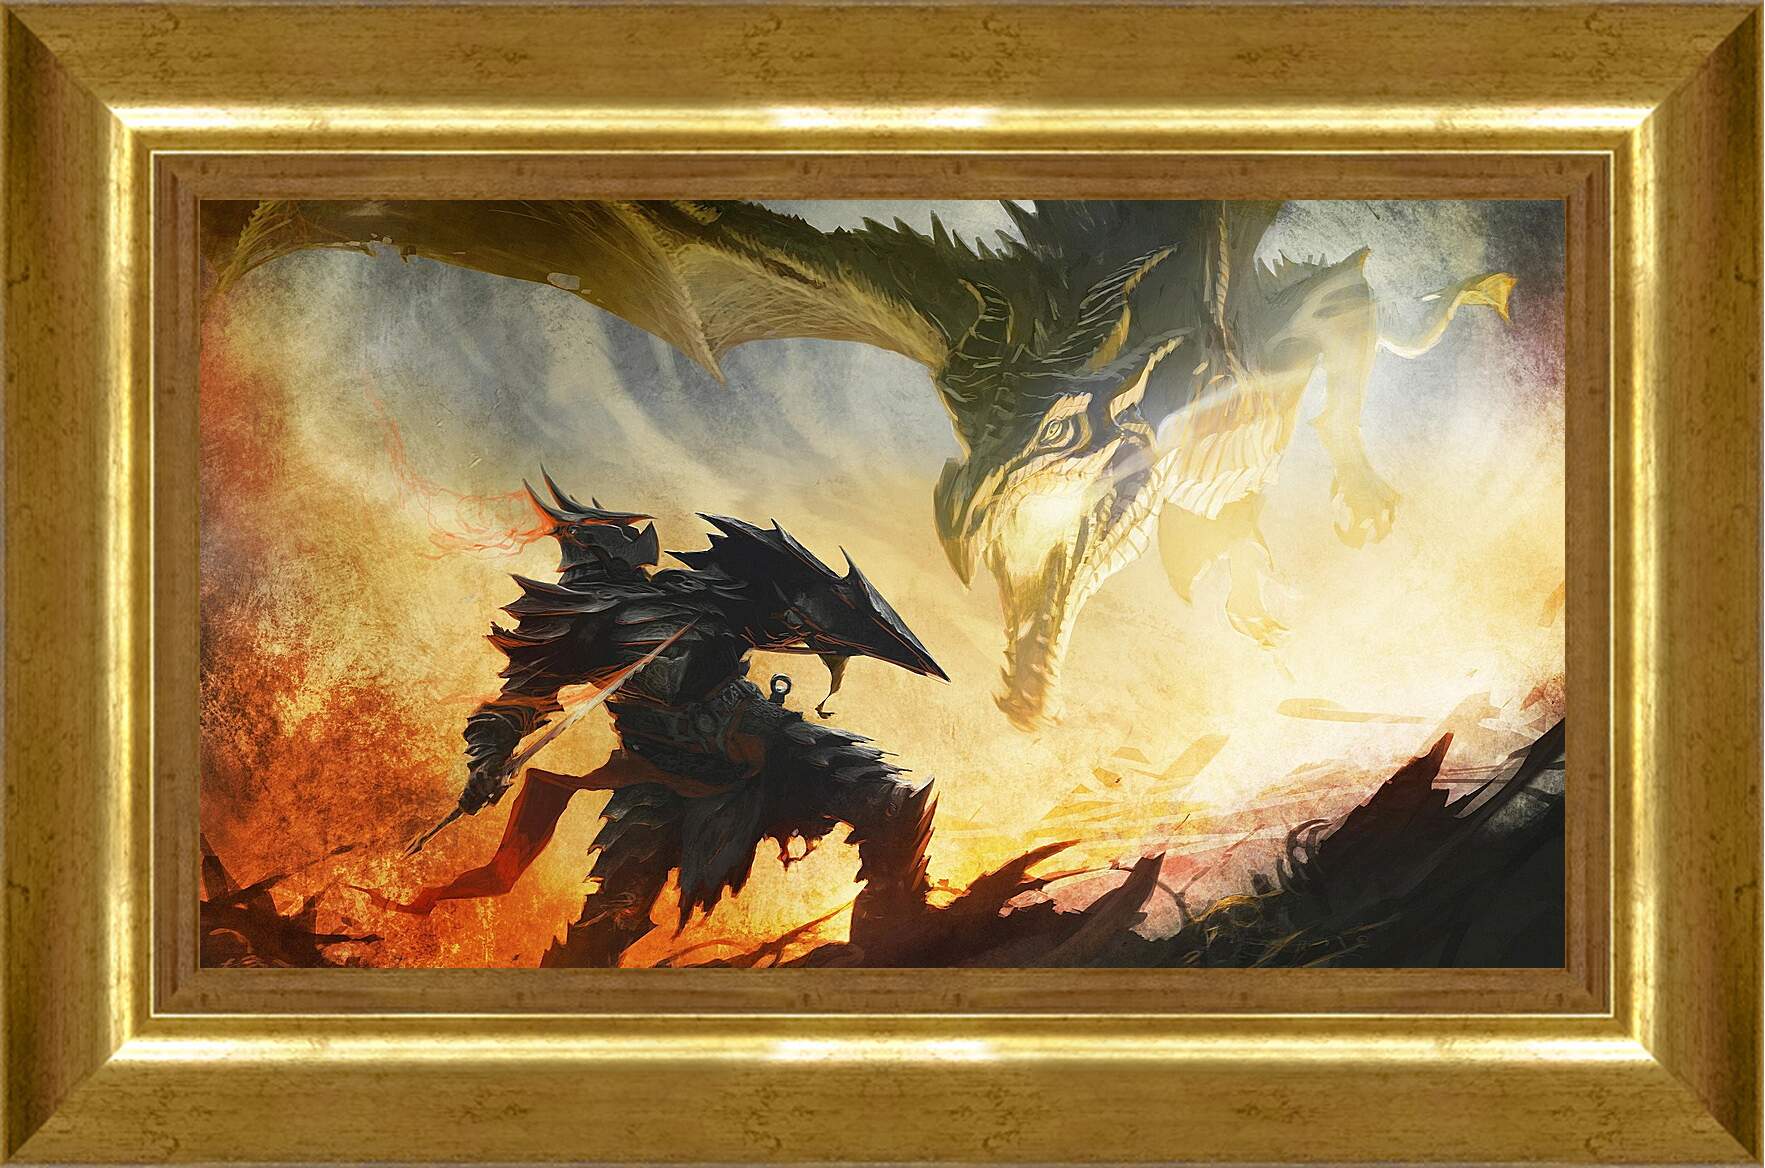 Картина в раме - the elder scrolls, dragon, warrior
